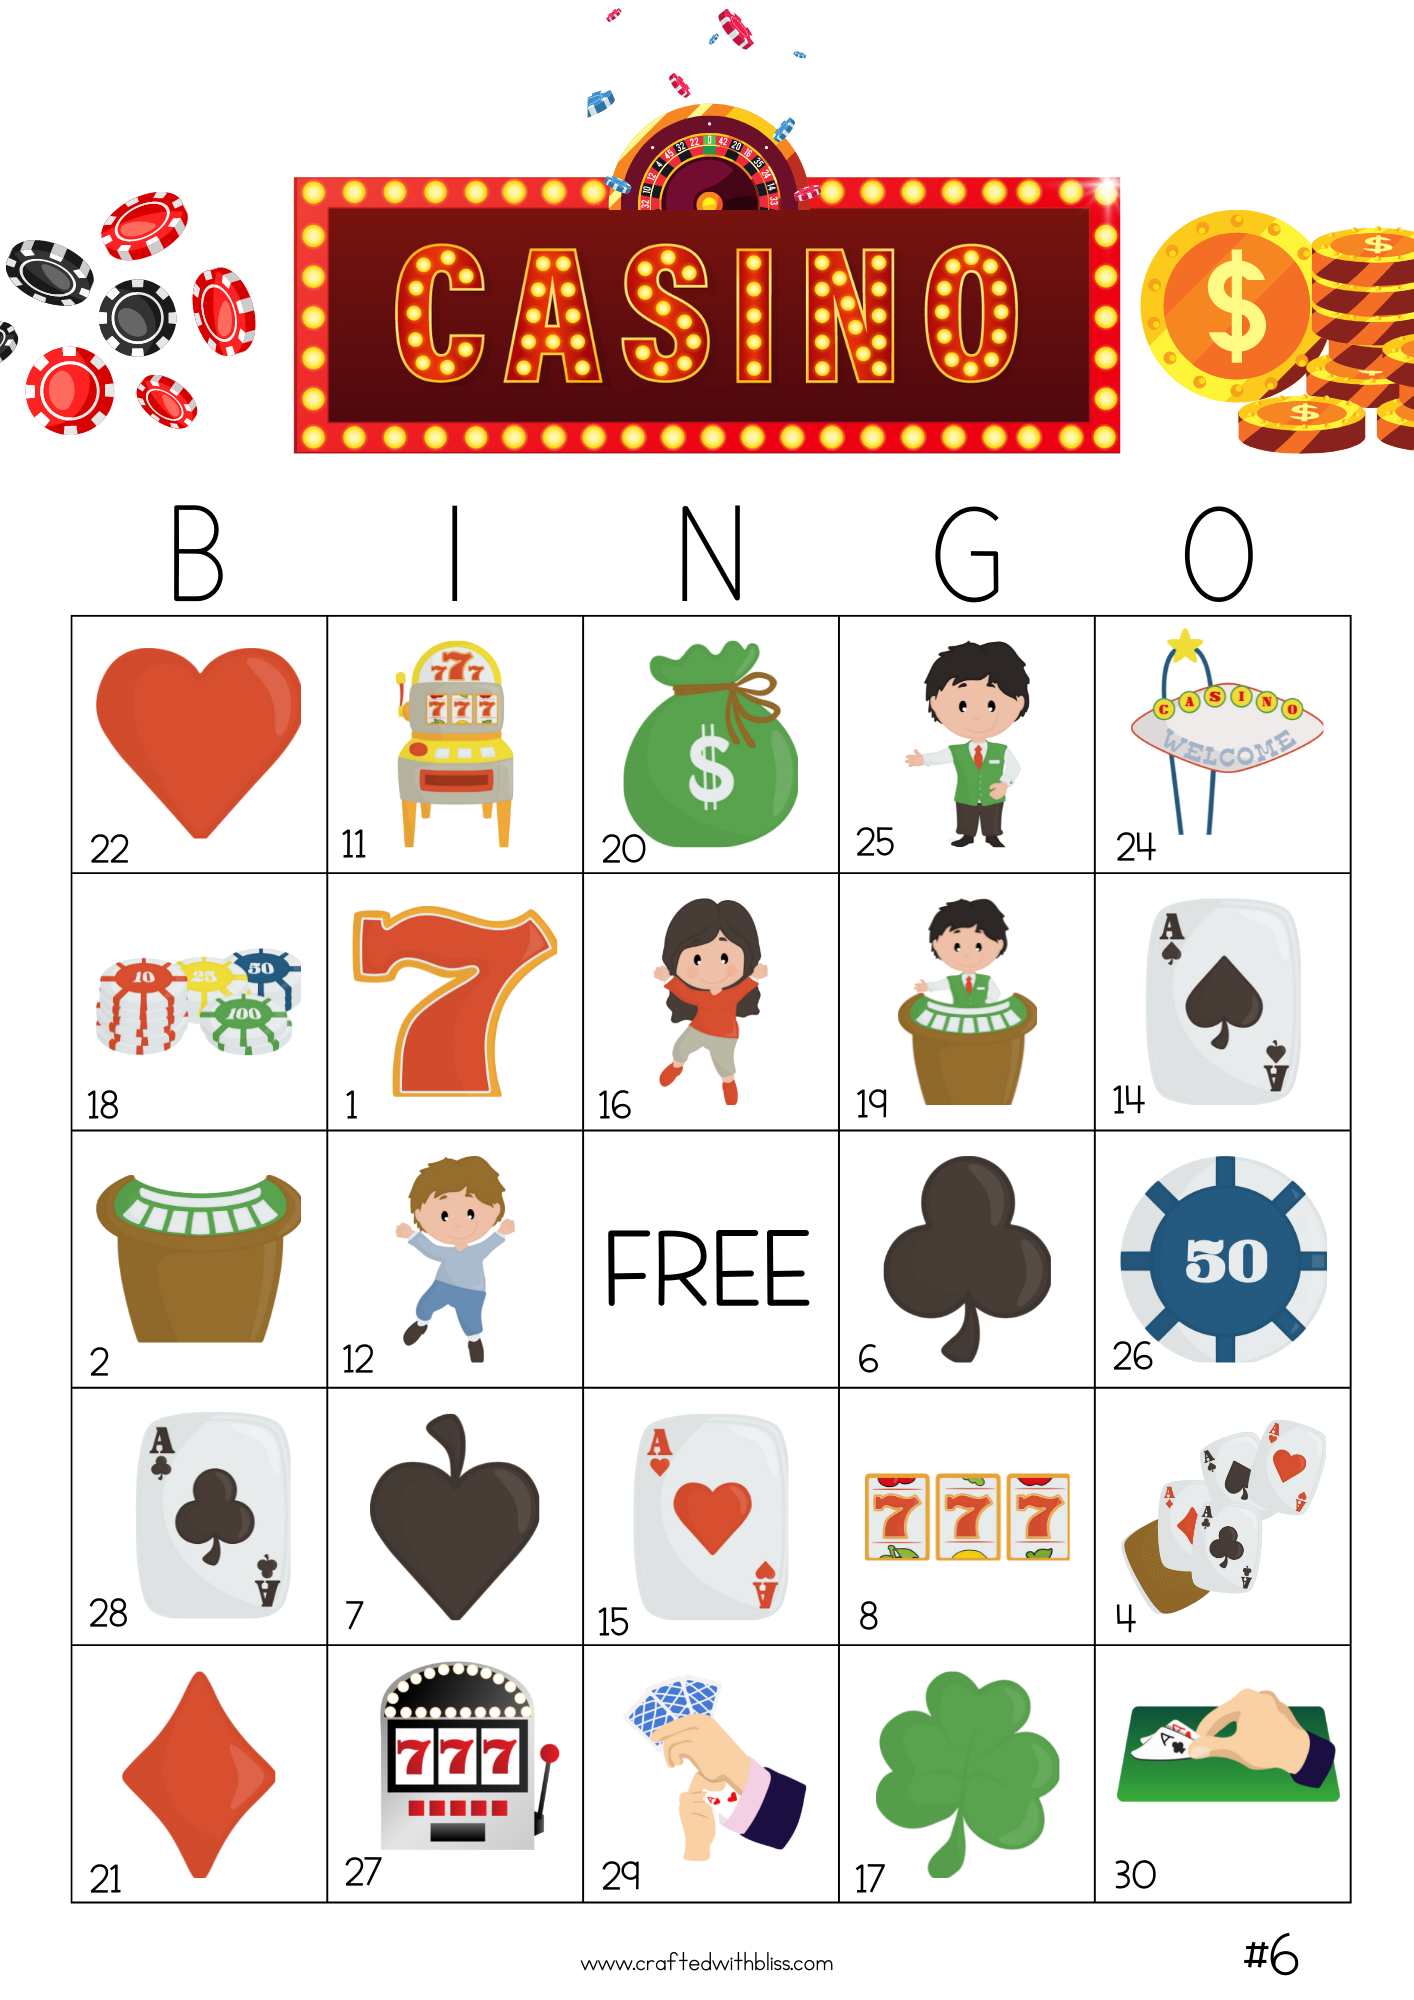 50 Casino Theme Bingo Cards (5x5)